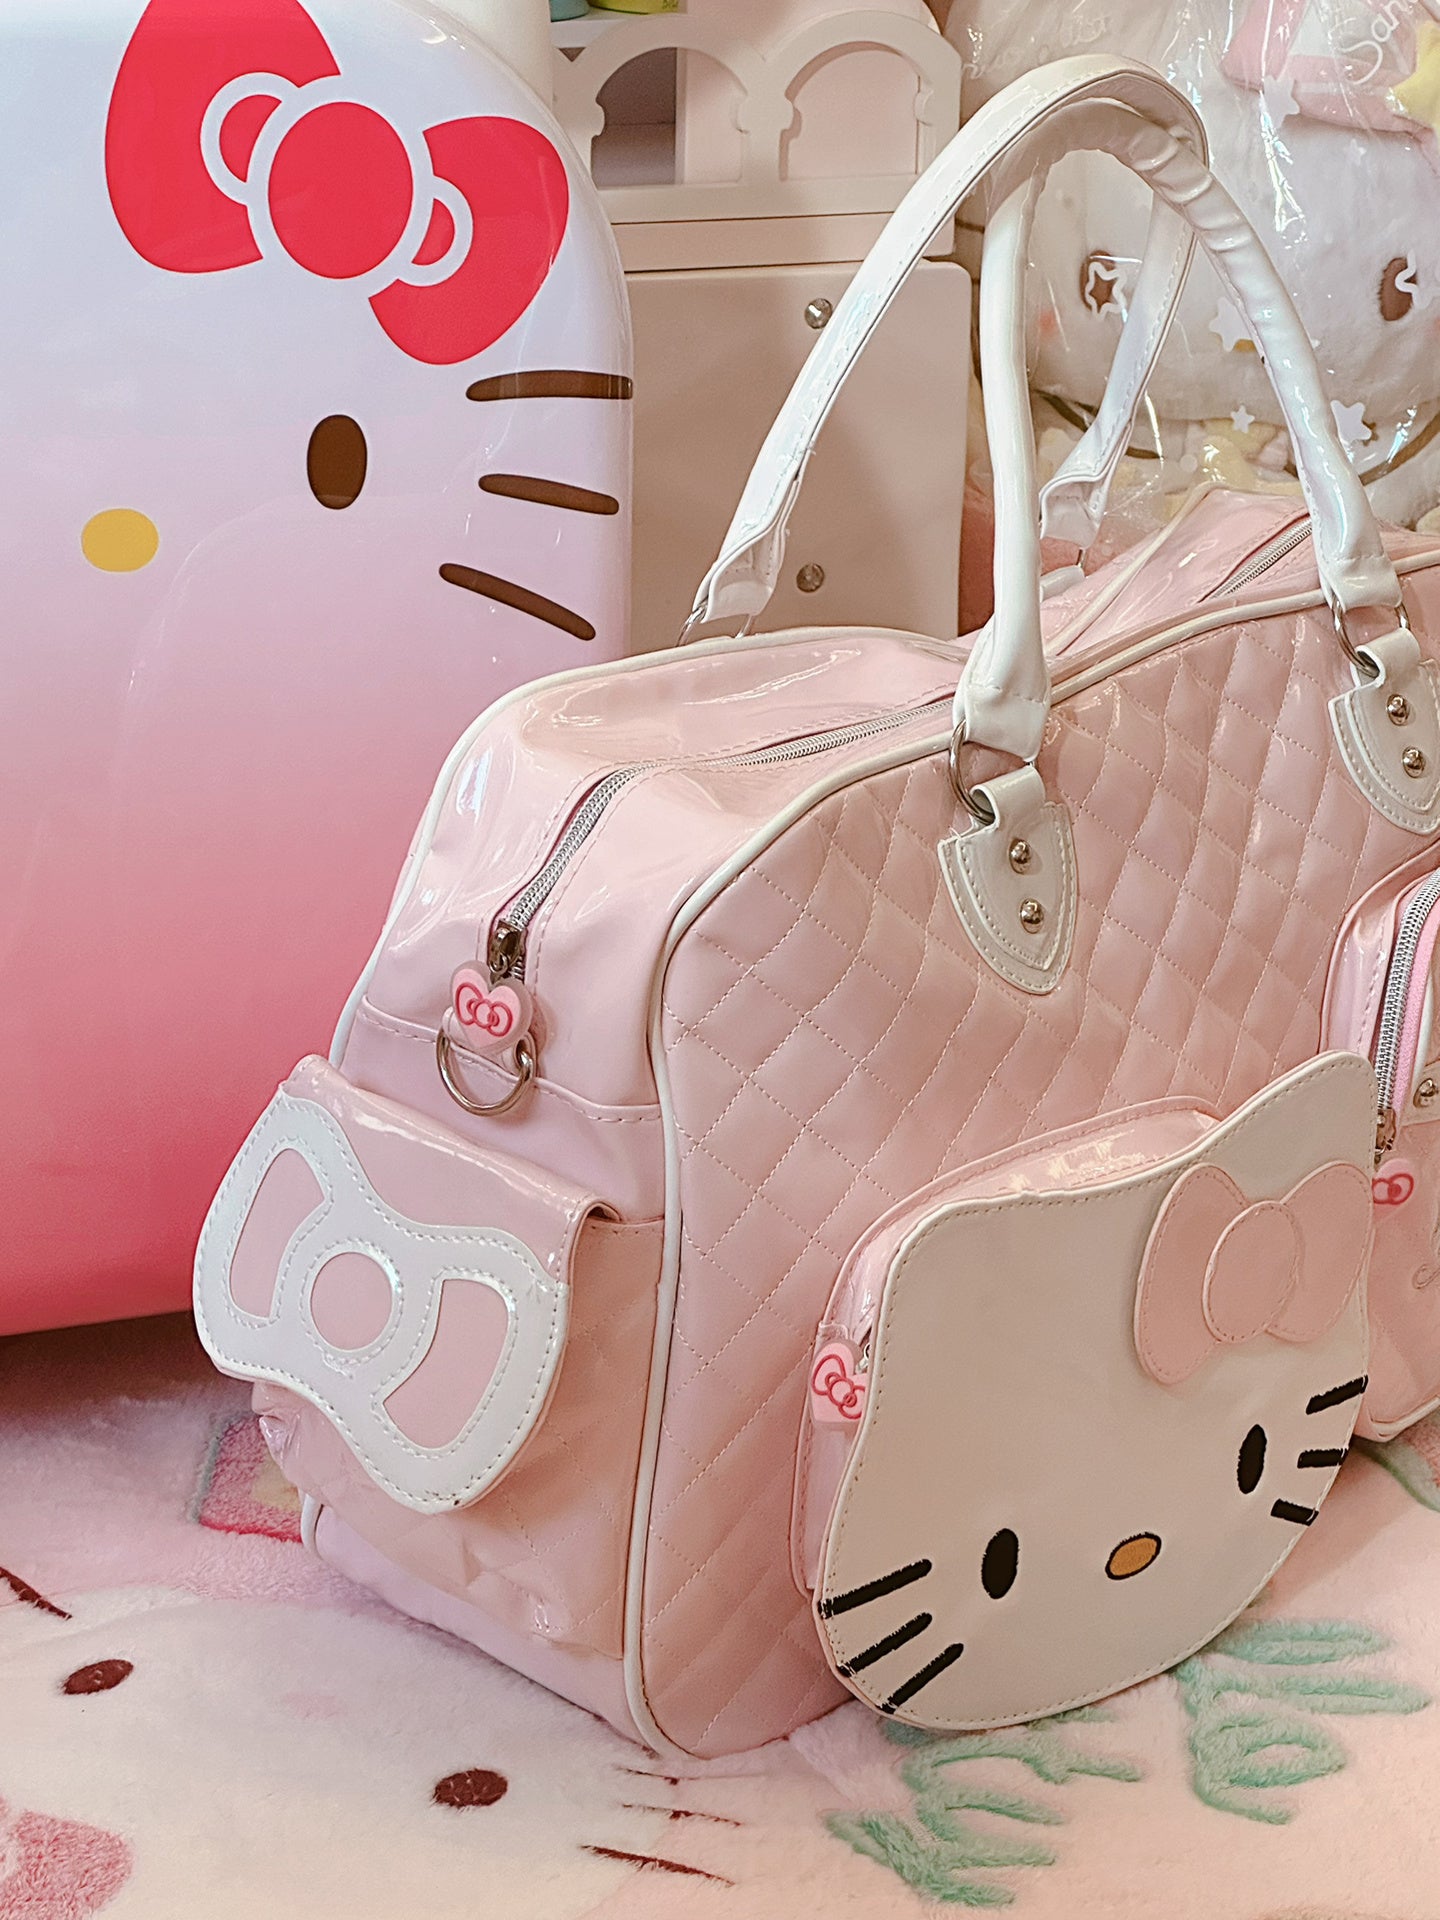 Weekender Bag for Women Cute Travel Tote Bag Gym Duffel Bag with